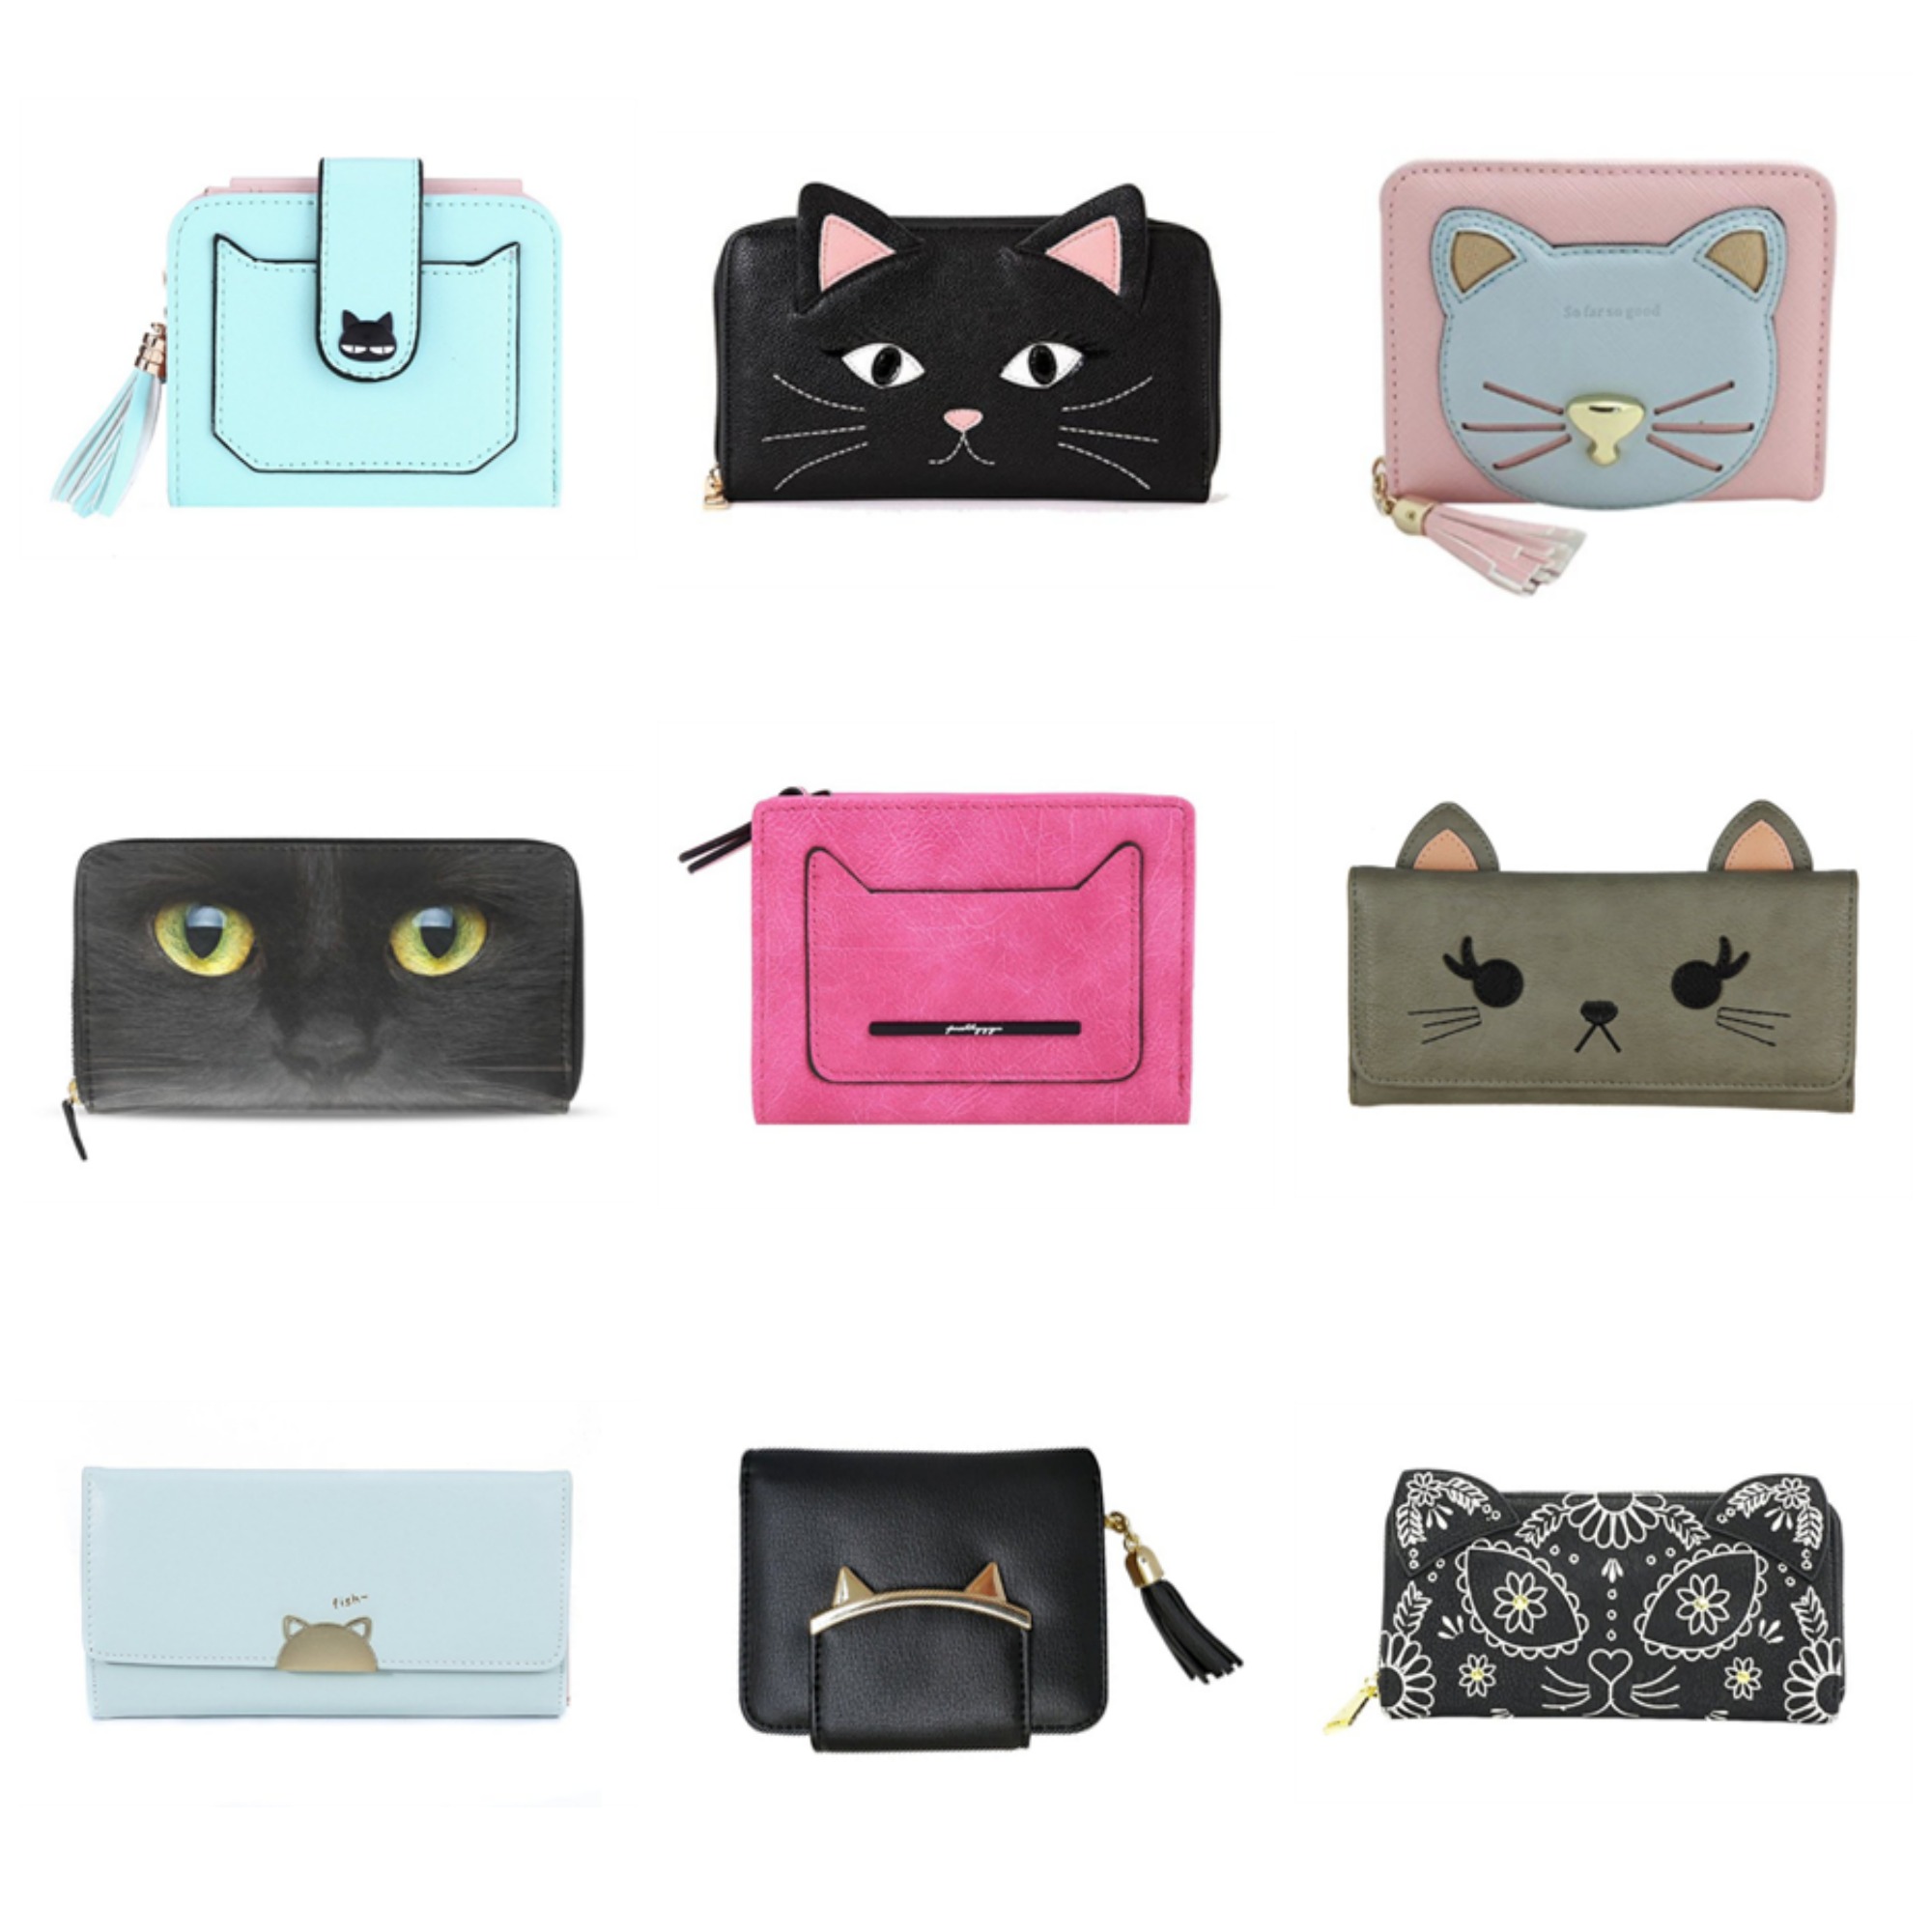 Xiang Ru Funny Cat Face Zipper Case Coin Money Purse Wallet Bag Pouch Handbag 